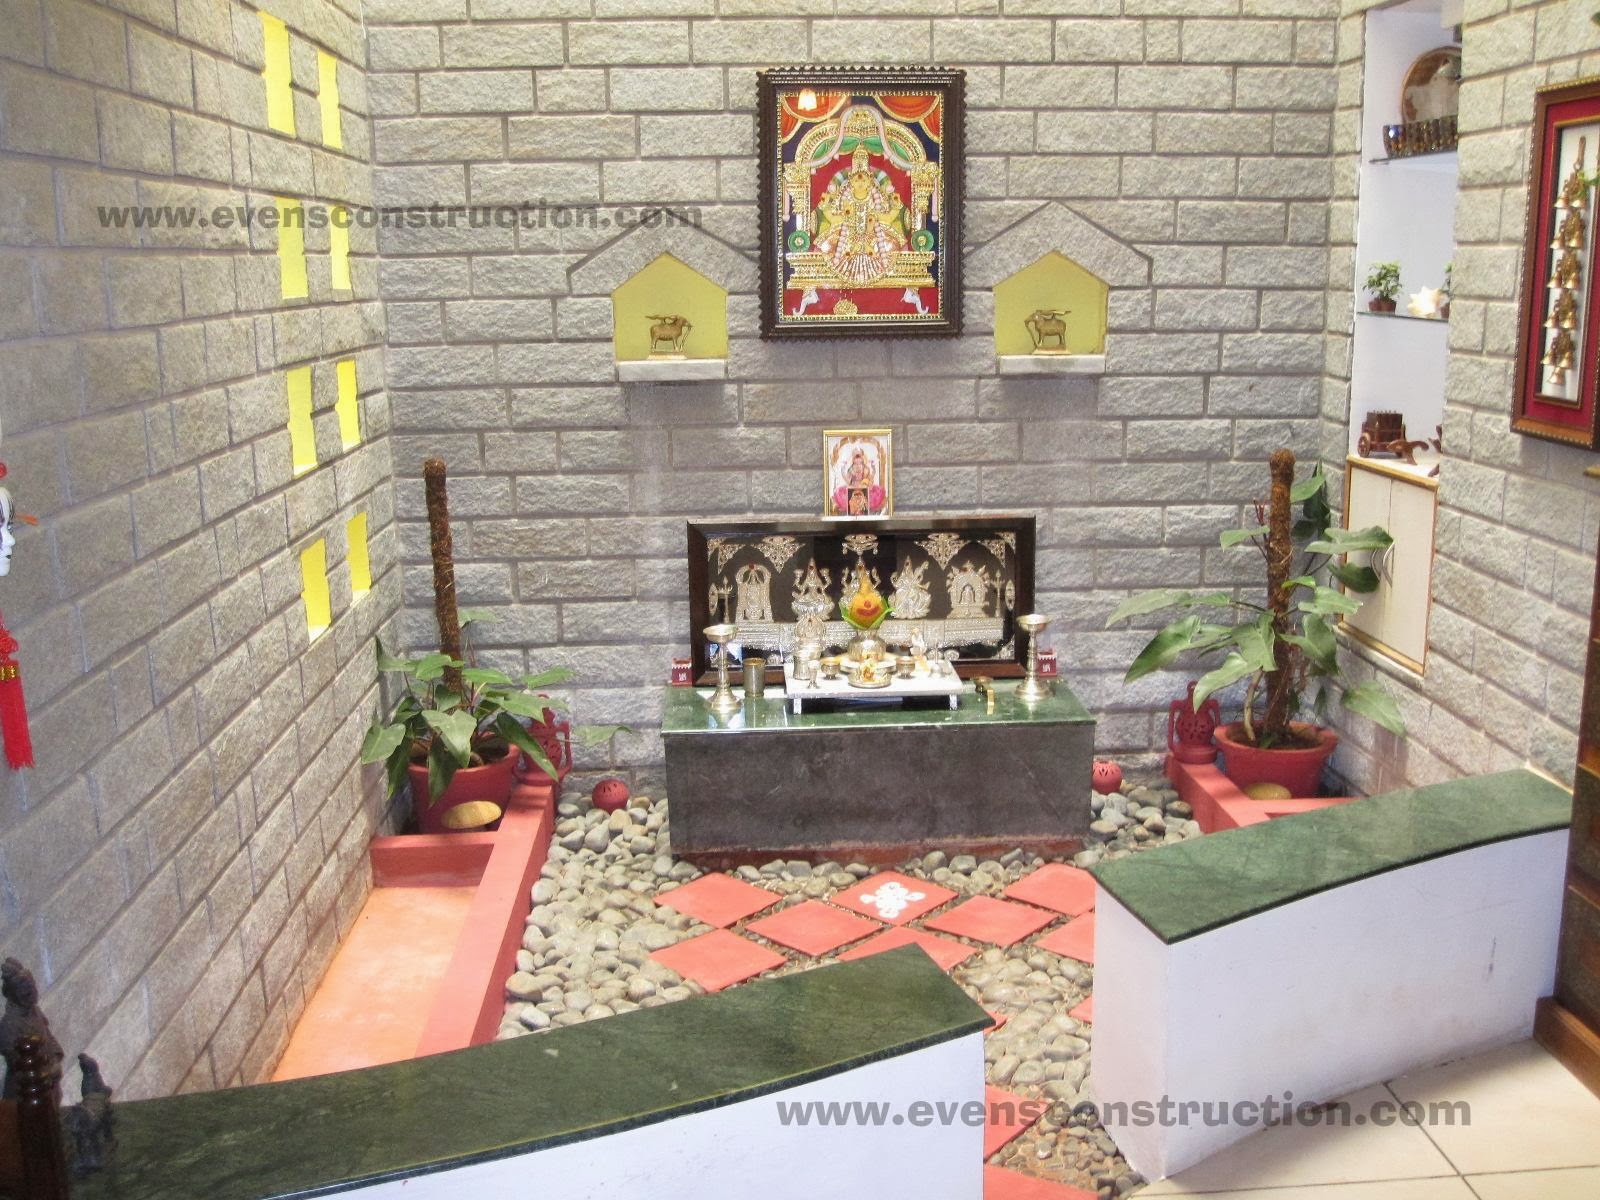 Evens Construction Pvt Ltd: Puja Room and Vasthu